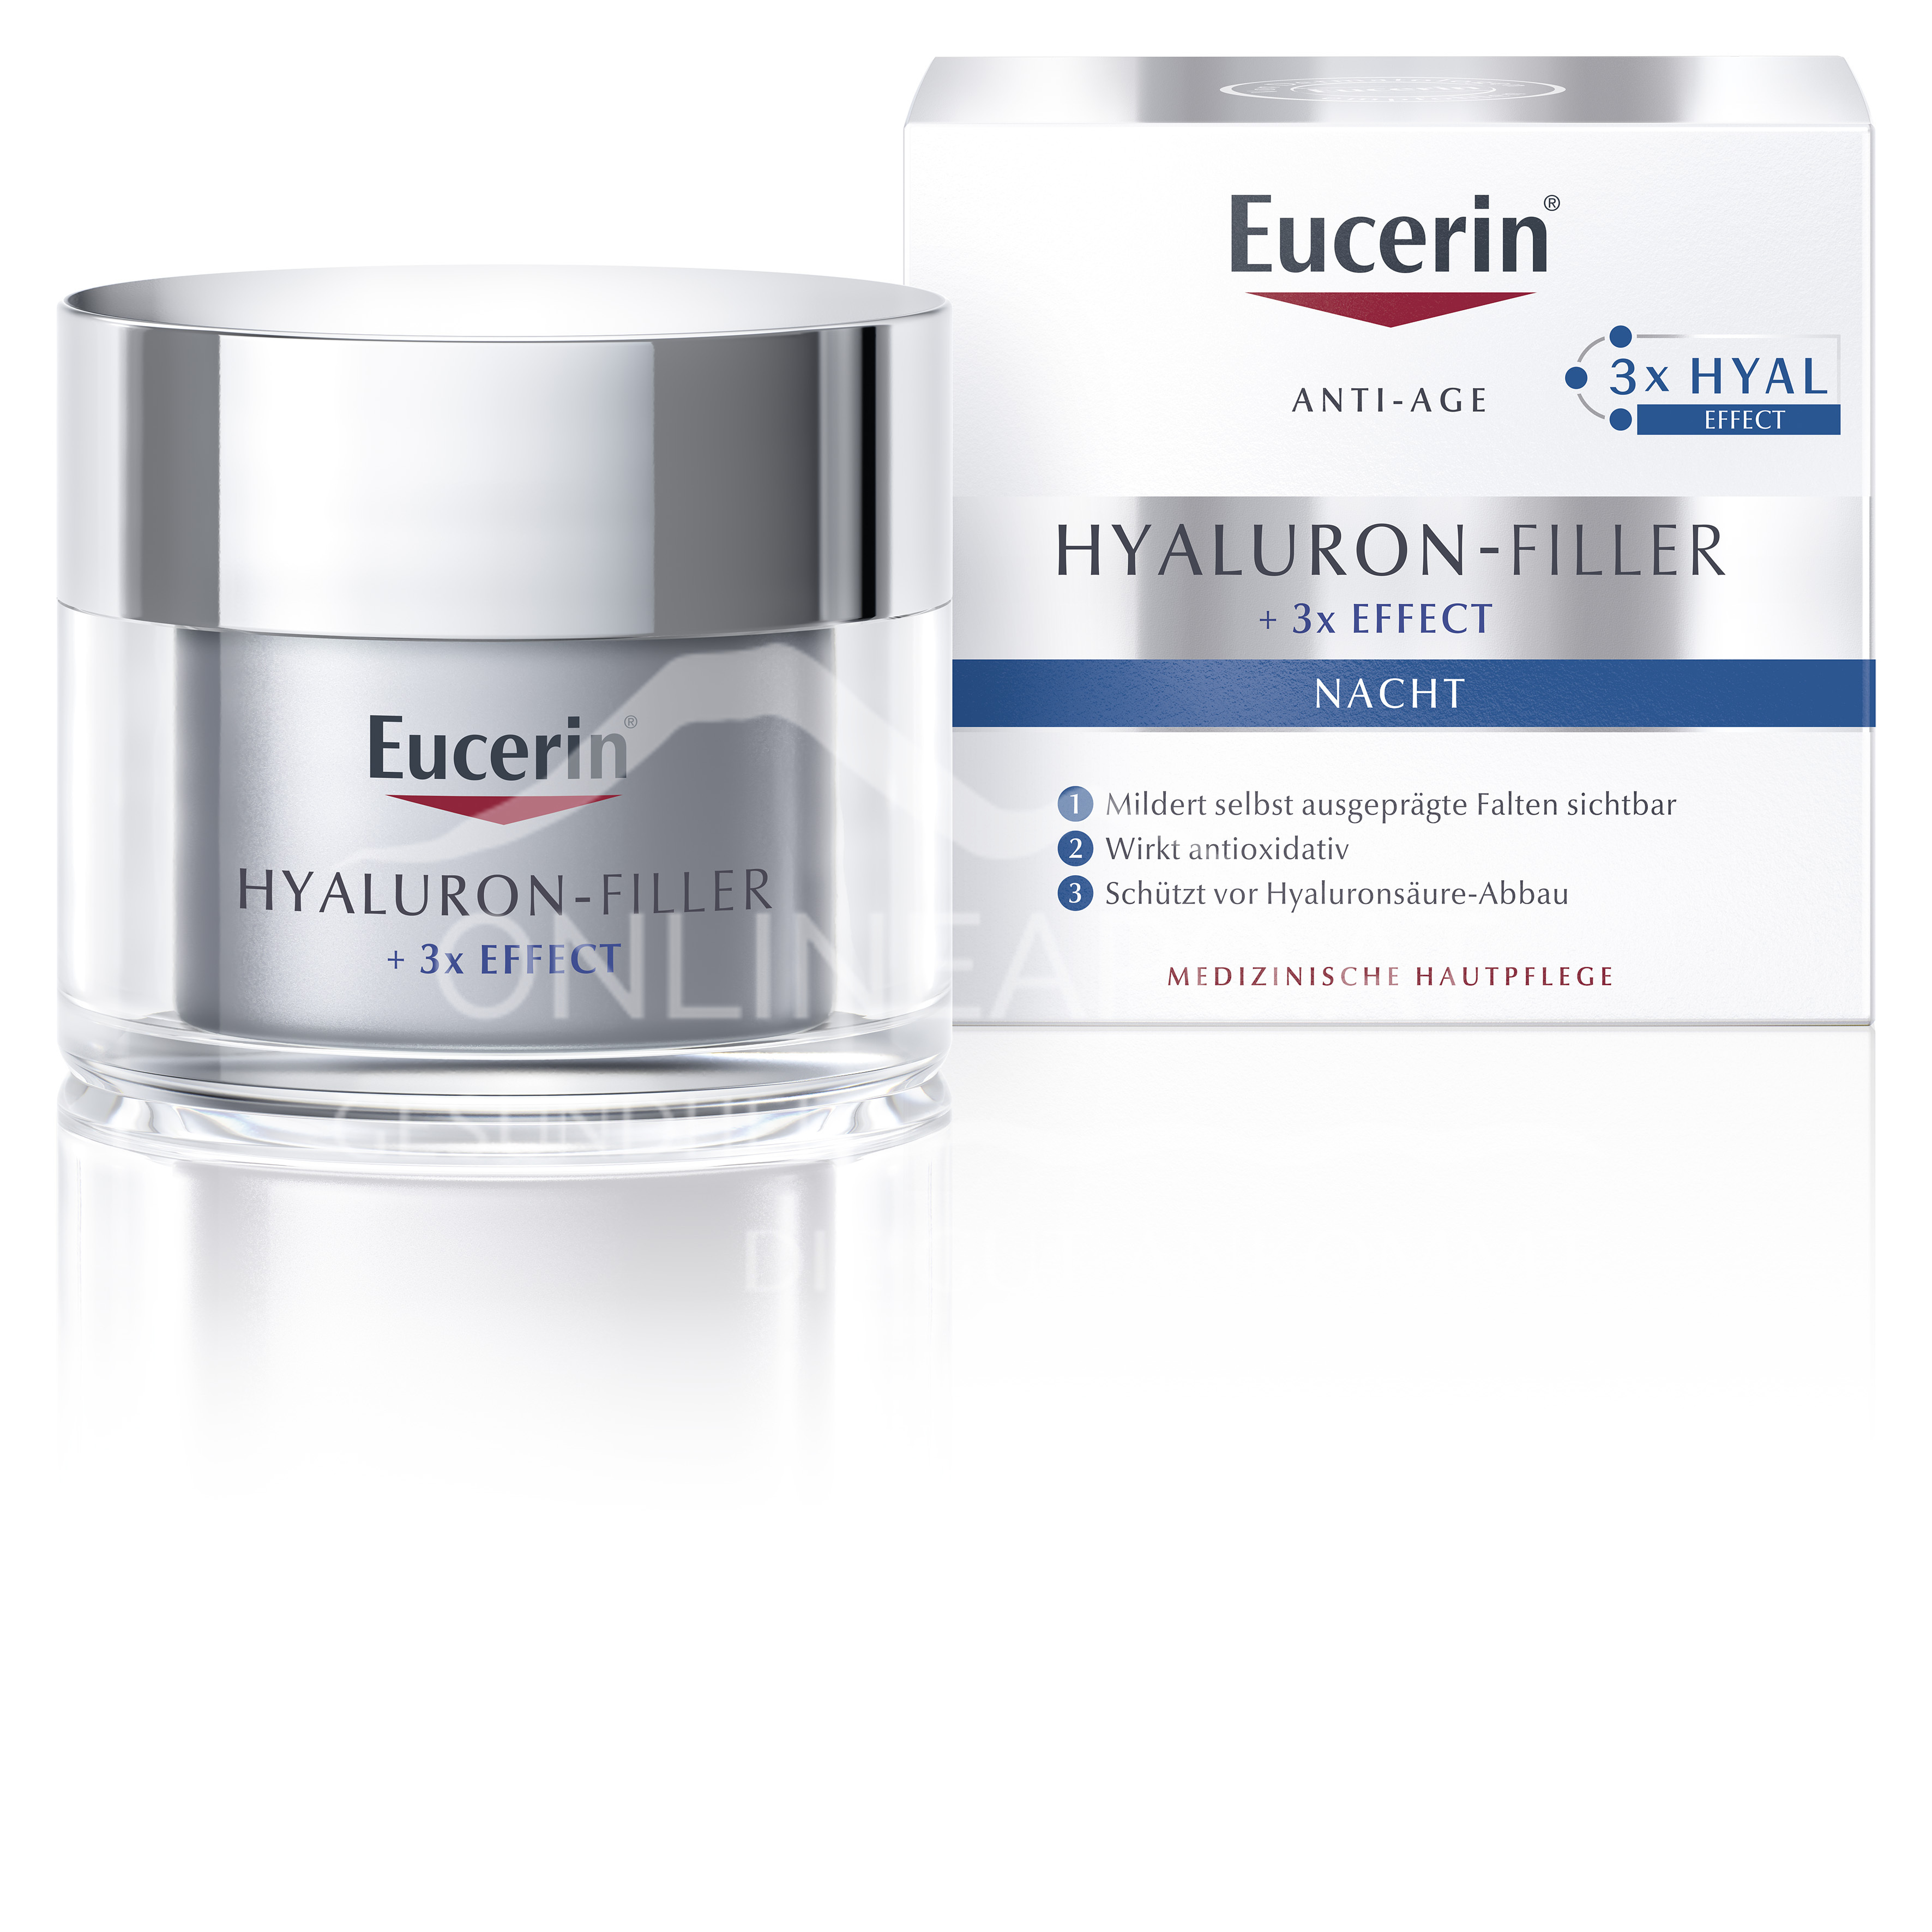 Eucerin® HYALURON-FILLER + 3x EFFECT Nachtpflege